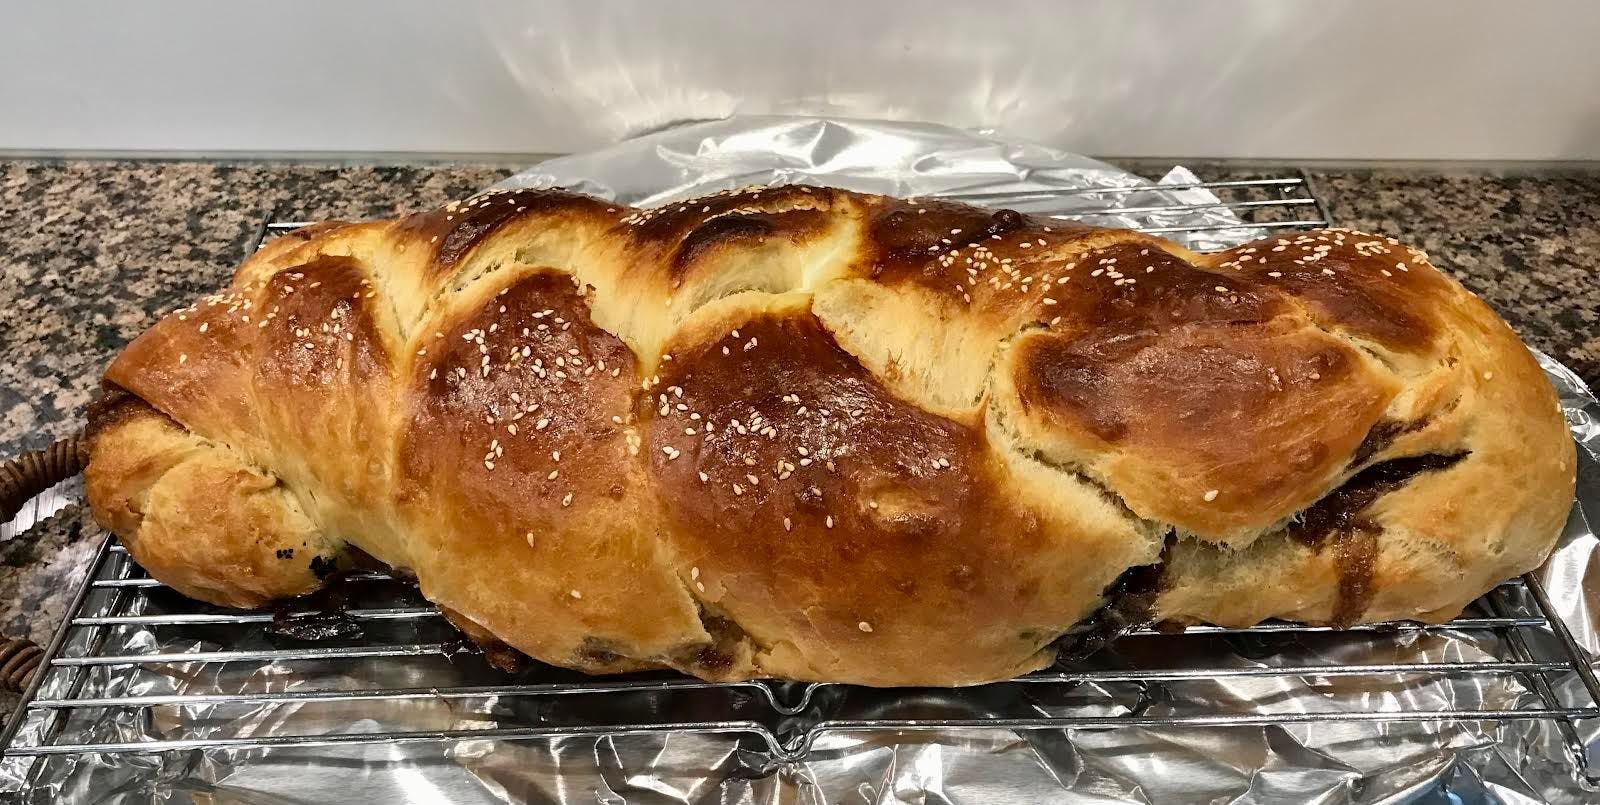 A fresh-baked braided challah bread